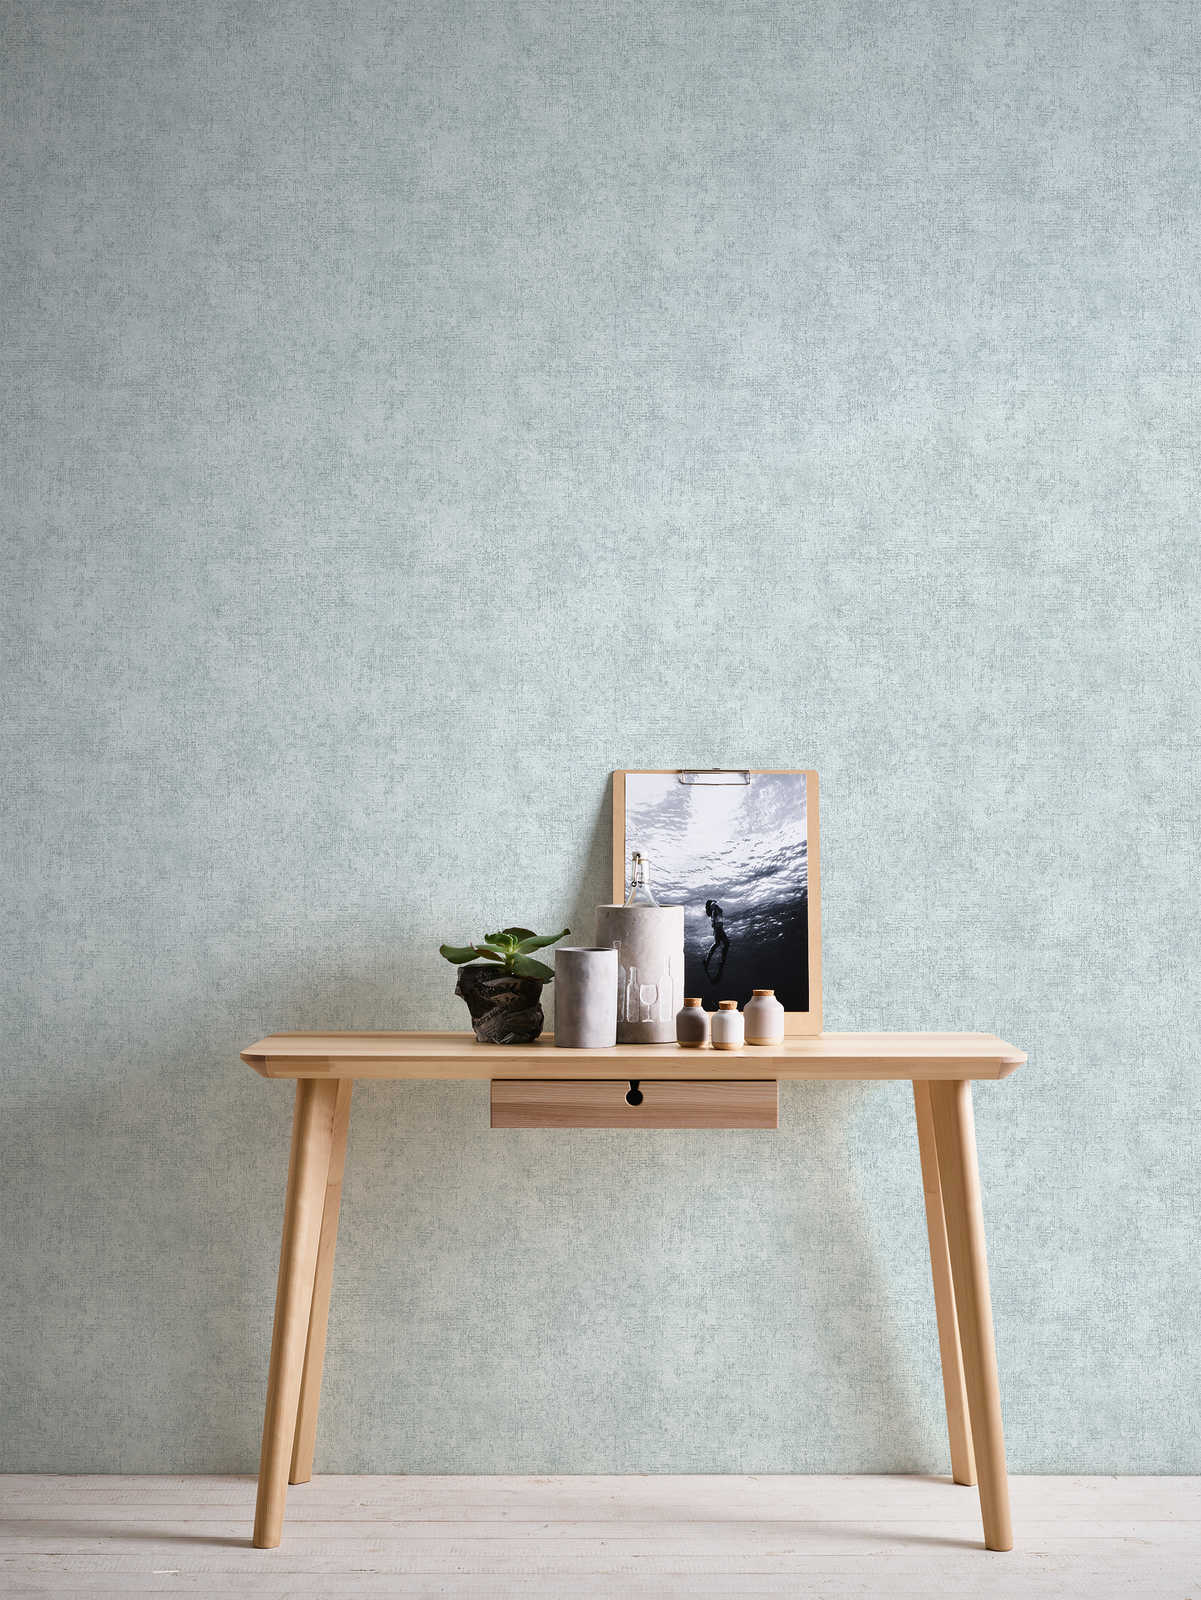             Non-woven wallpaper rustic plaster structure - green, beige
        